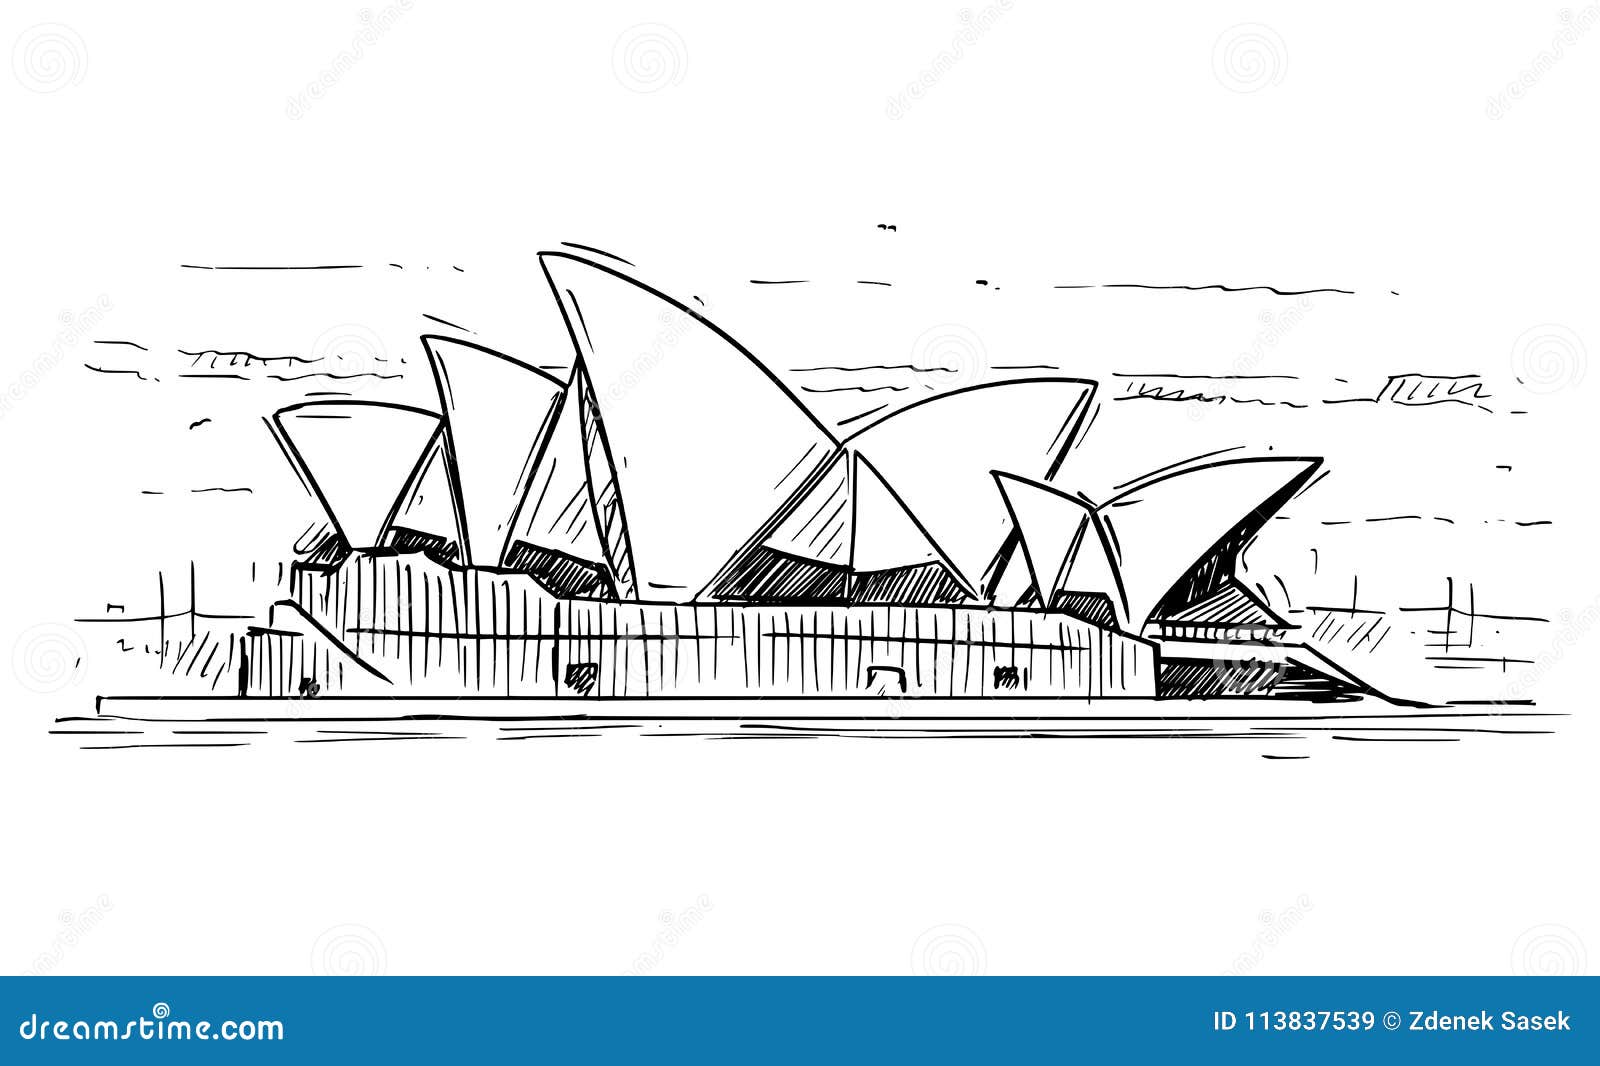 Sydney Opera House in Edges, Shapes and Volumes - Liz Steel : Liz Steel